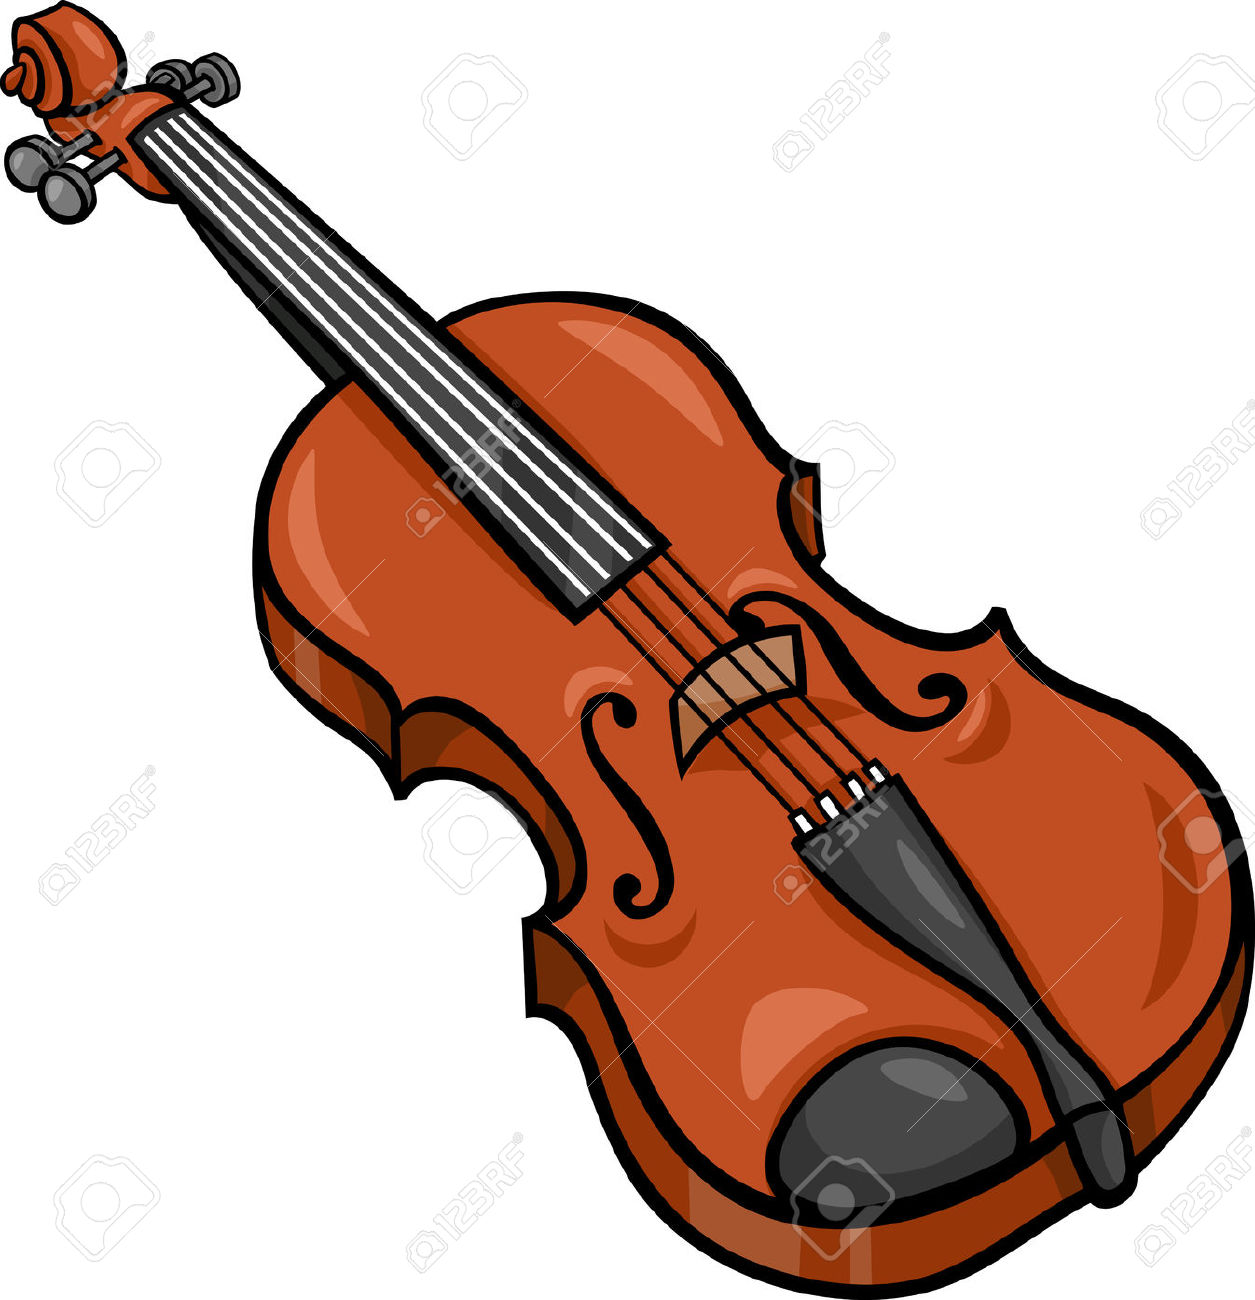 Fiddle Bow Clip Art Illustrat